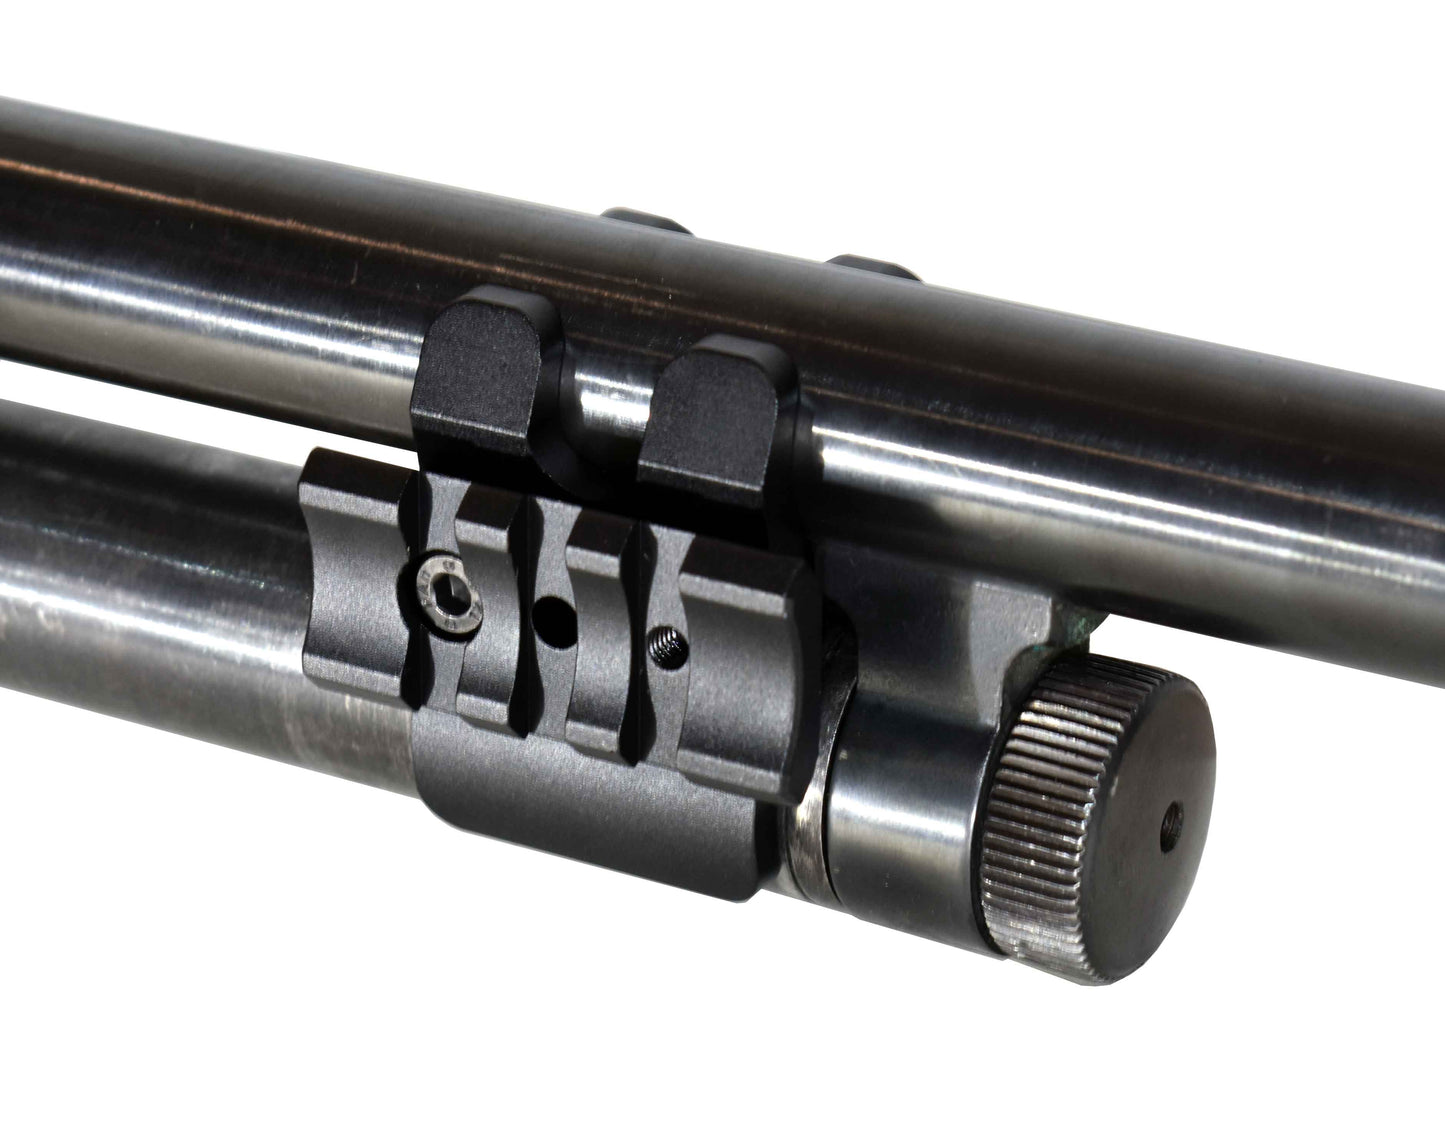 Beretta 1301 tactical 12 gauge pump aluminum mount with 2 side picatinny rails.